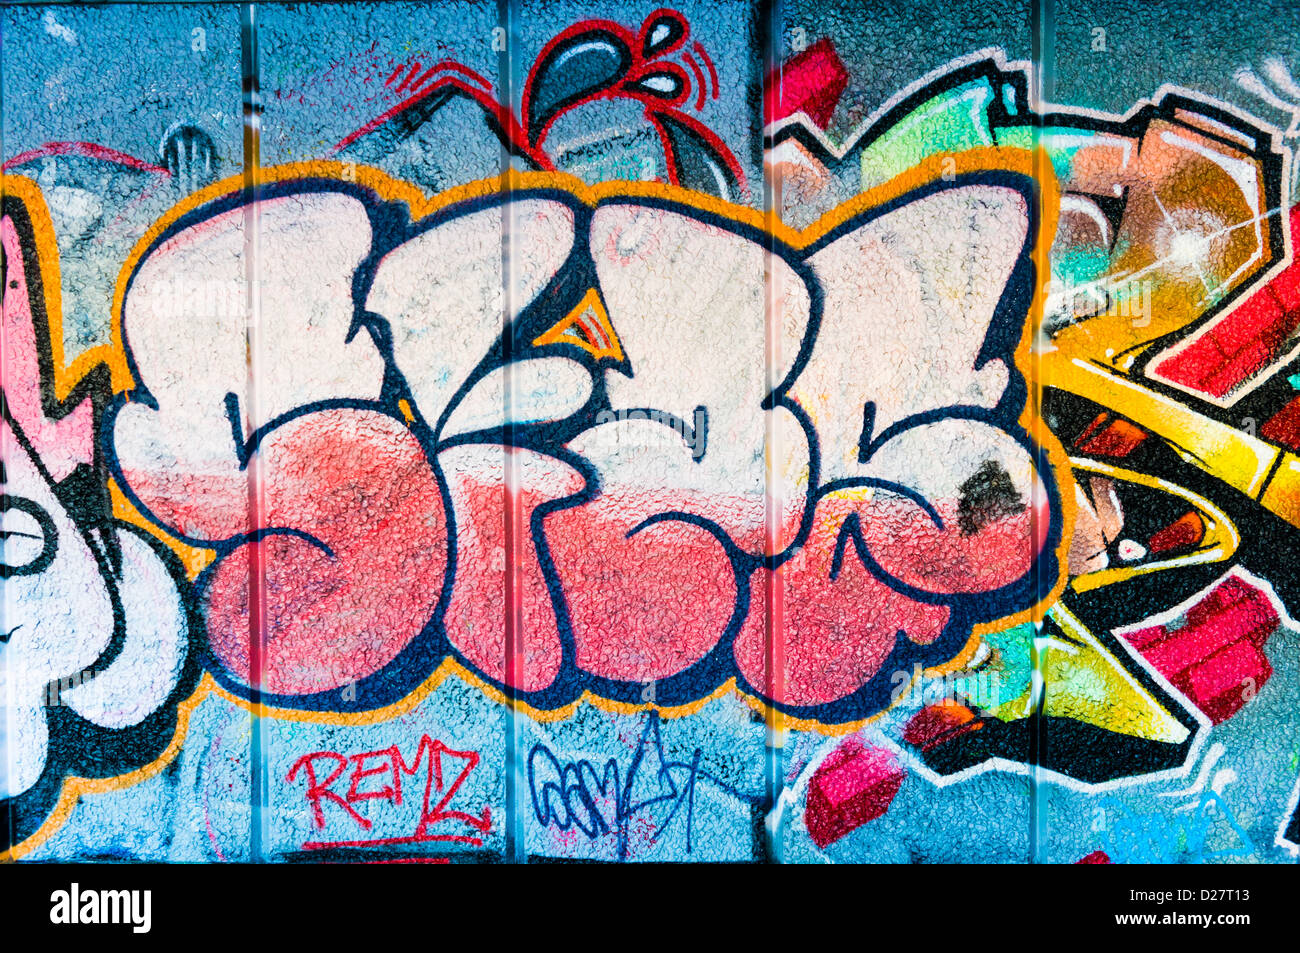 Etiqueta de arte callejero Graffiti en una pared, REINO UNIDO Foto de stock